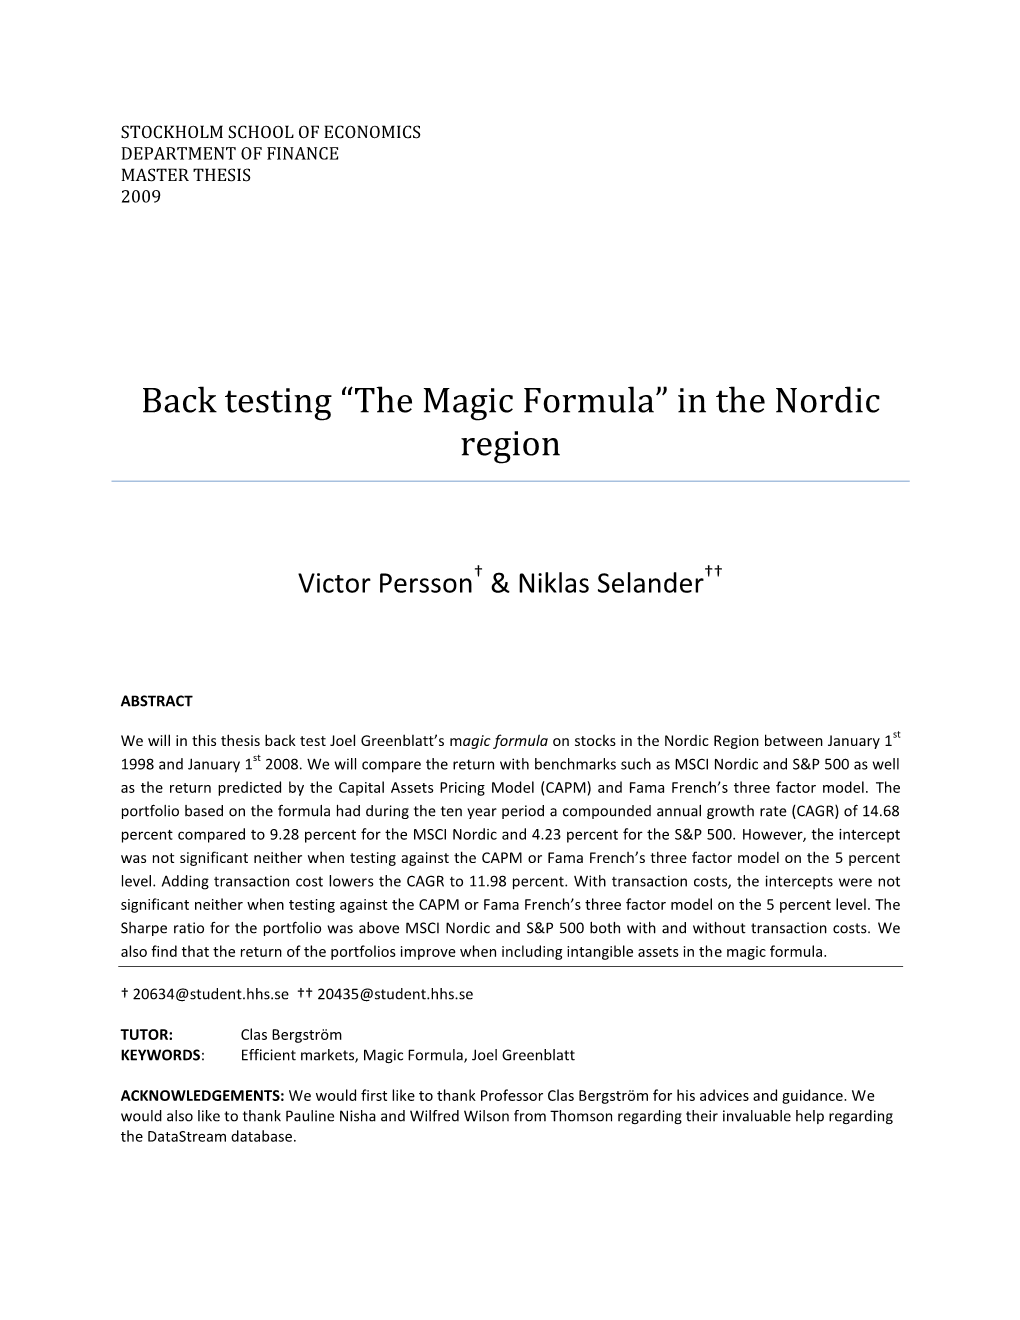 Back Testing “The Magic Formula” in the Nordic Region